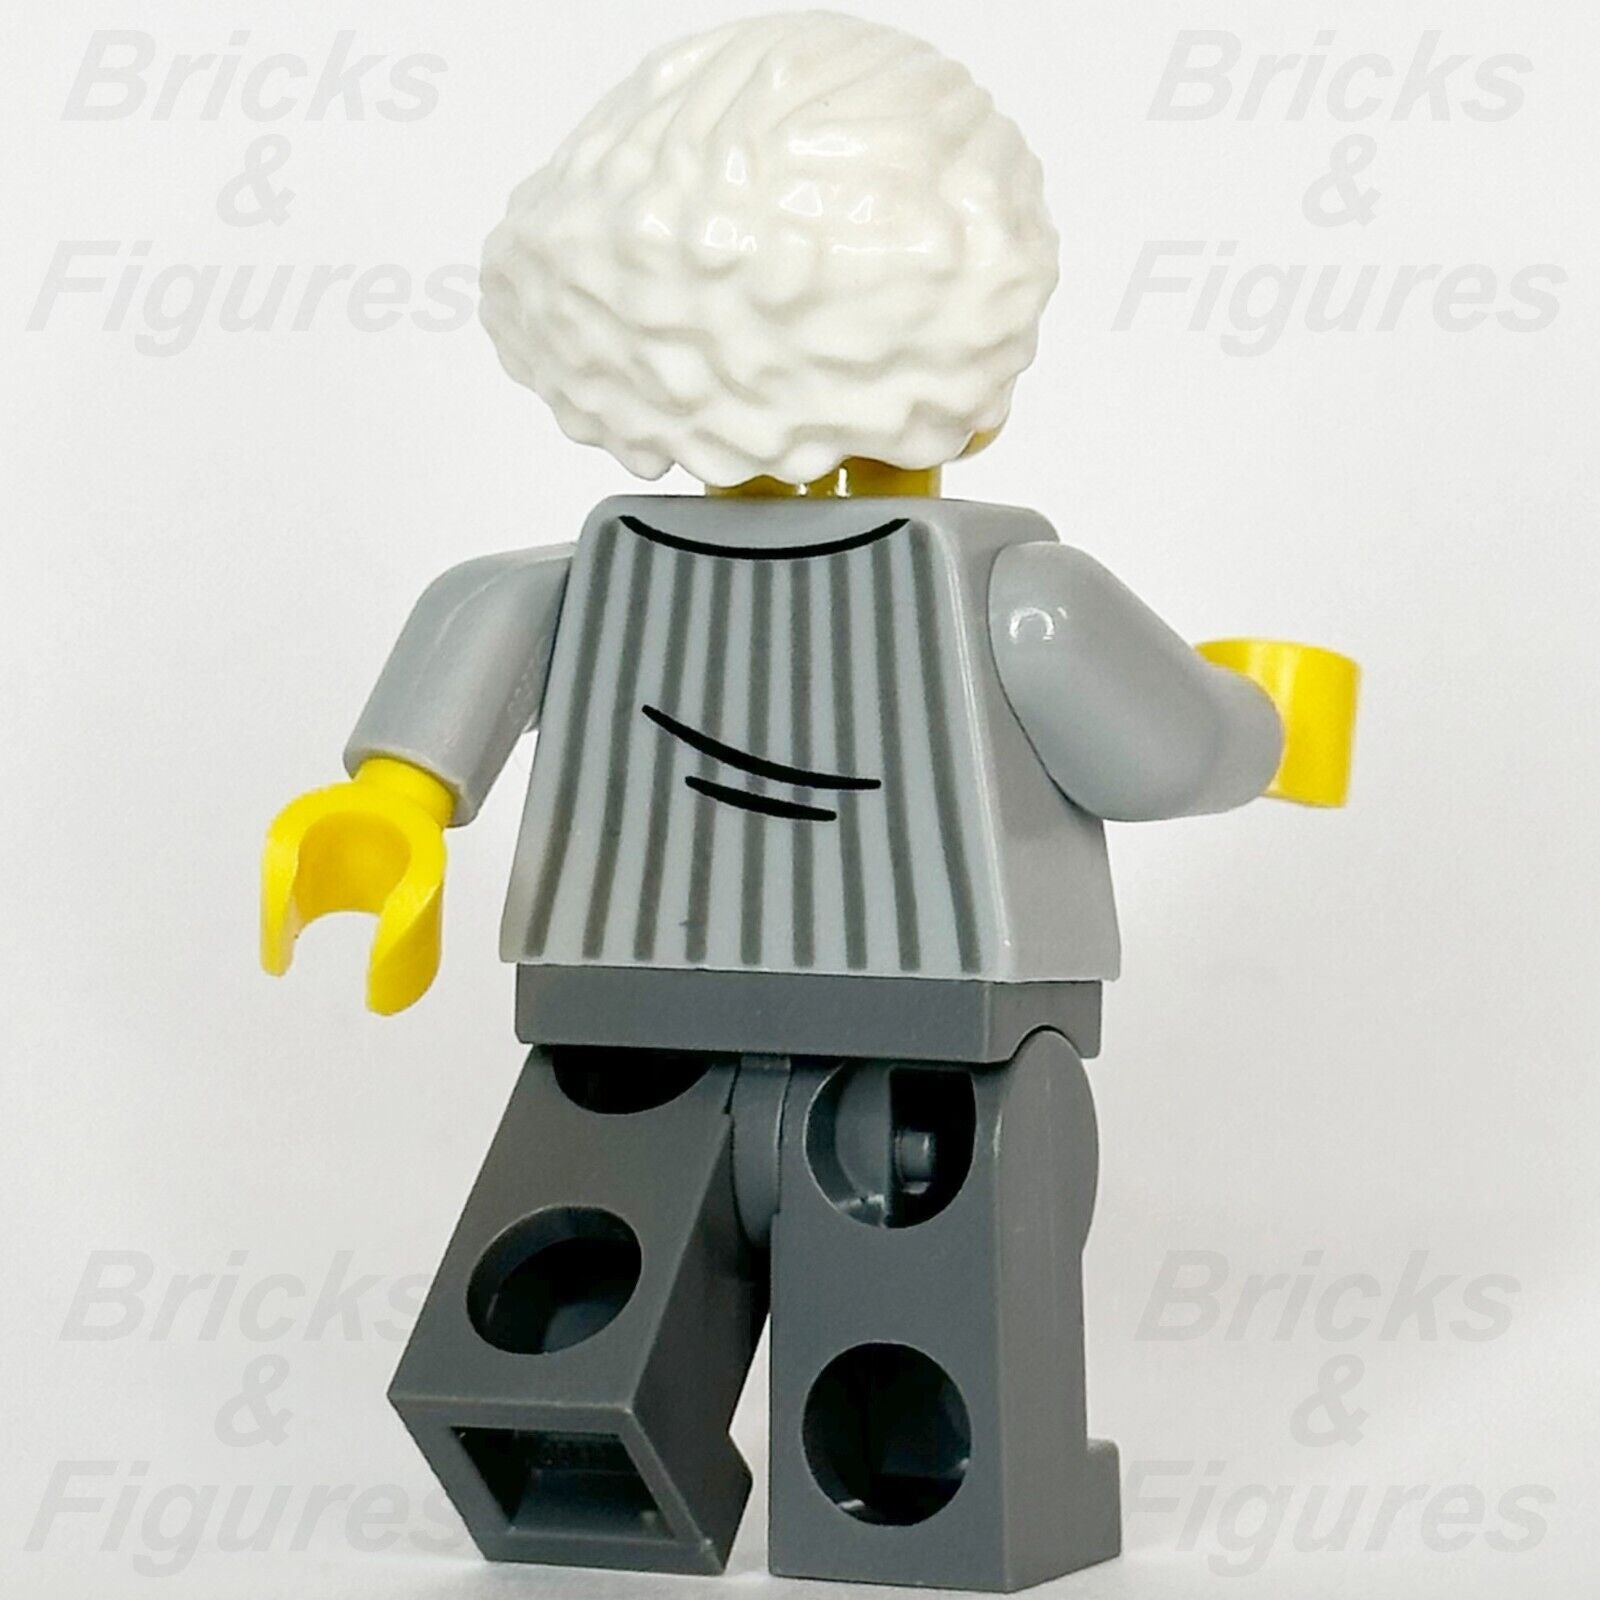 LEGO Ideas Scientist Minifigure Orient Express Passenger Train 21344 idea173 - Bricks & Figures